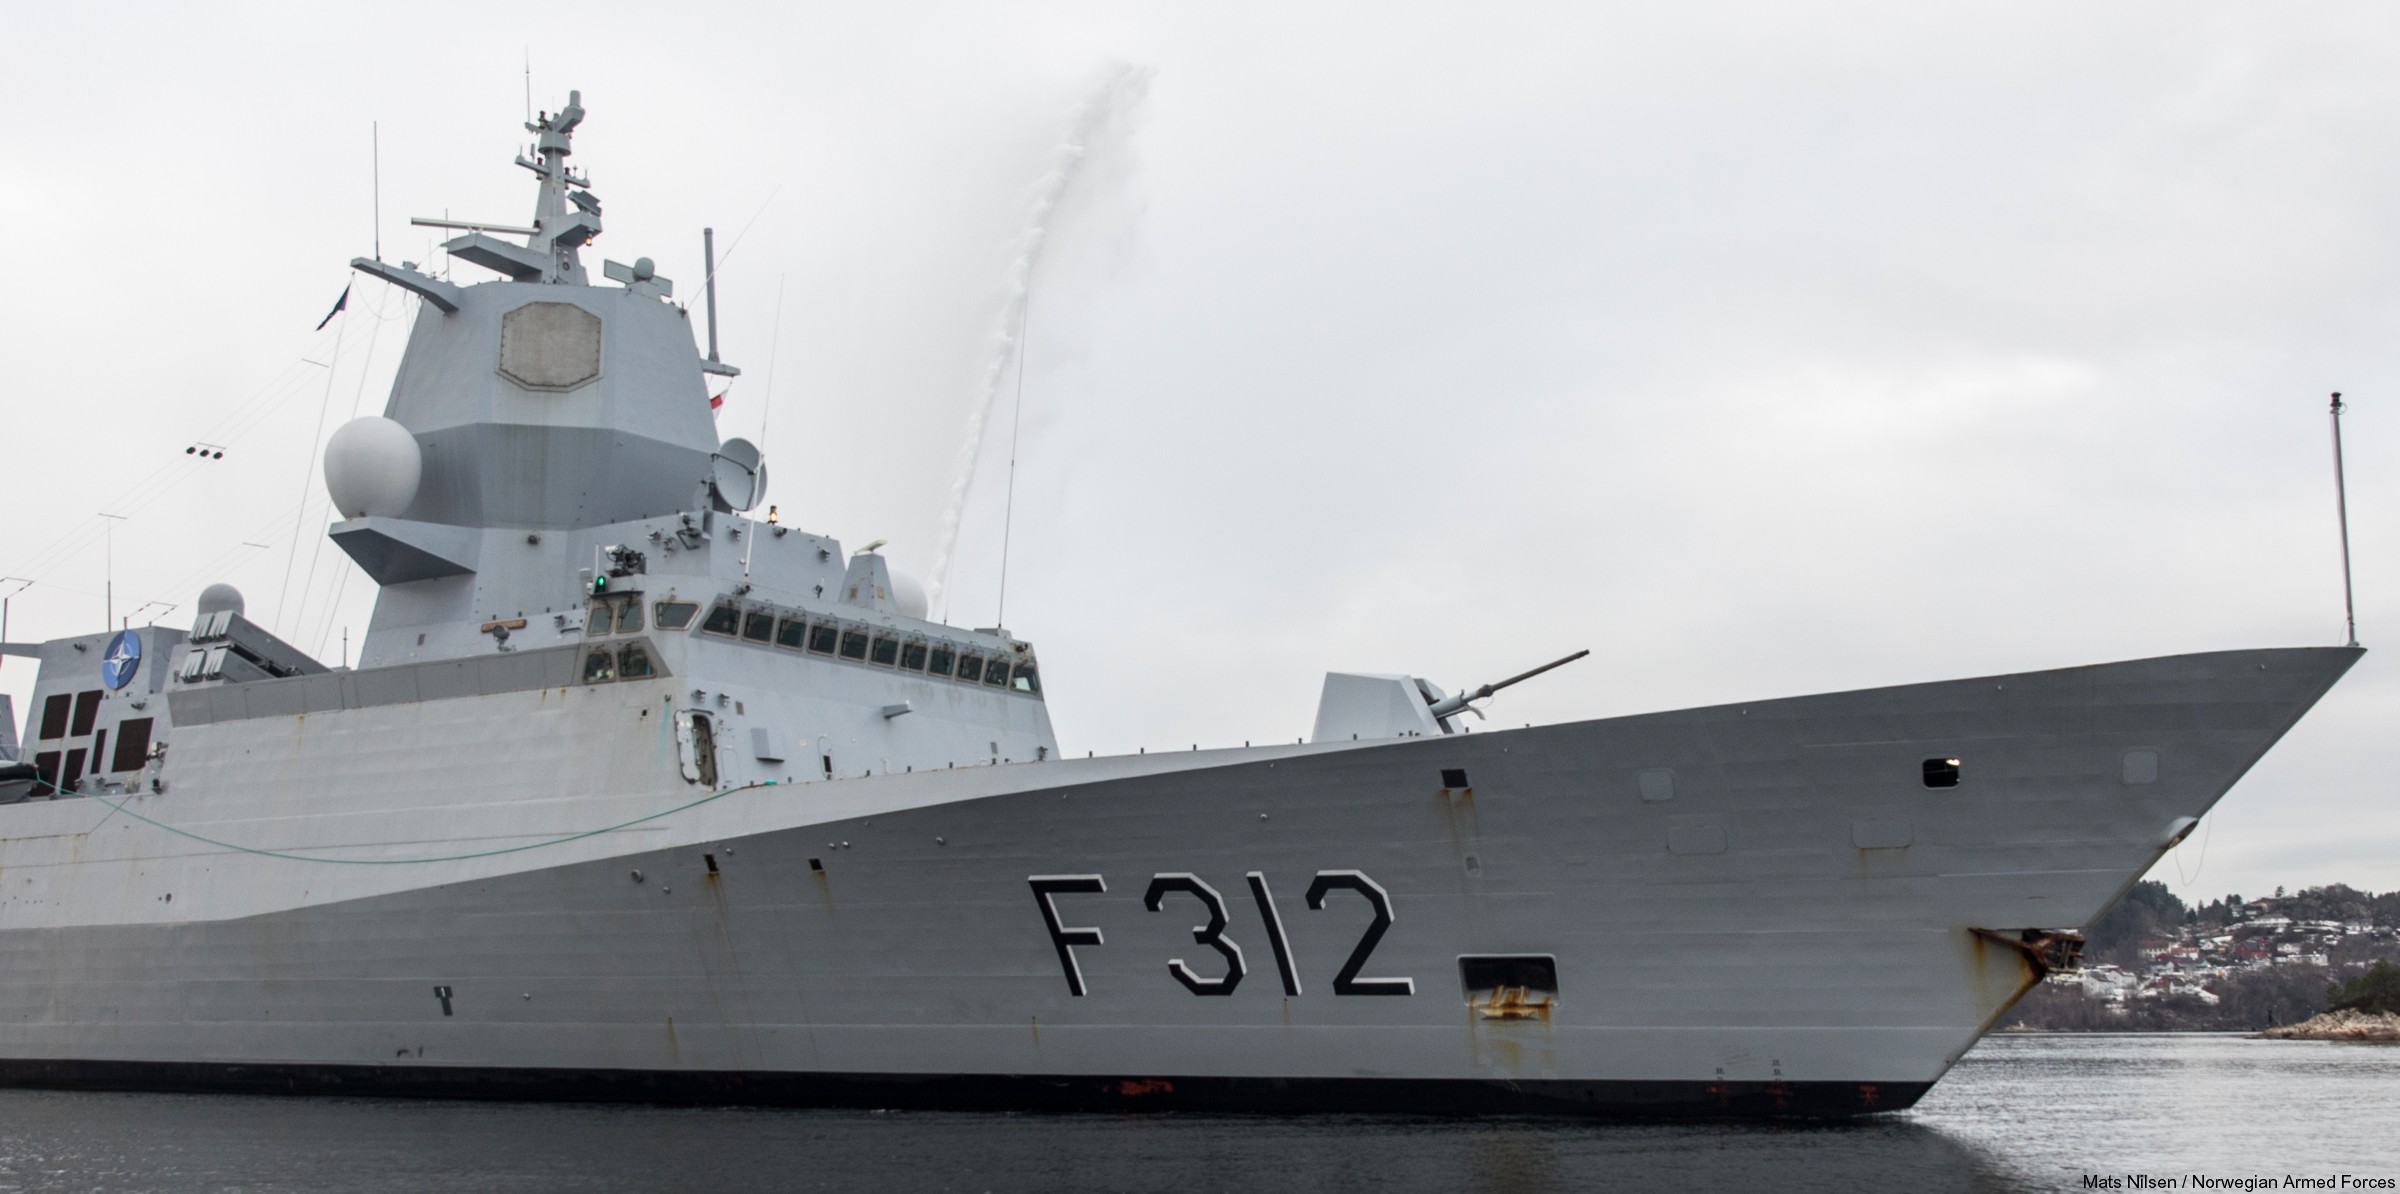 f-312 otto sverdrup hnoms knm fridtjof nansen class frigate royal norwegian navy 03